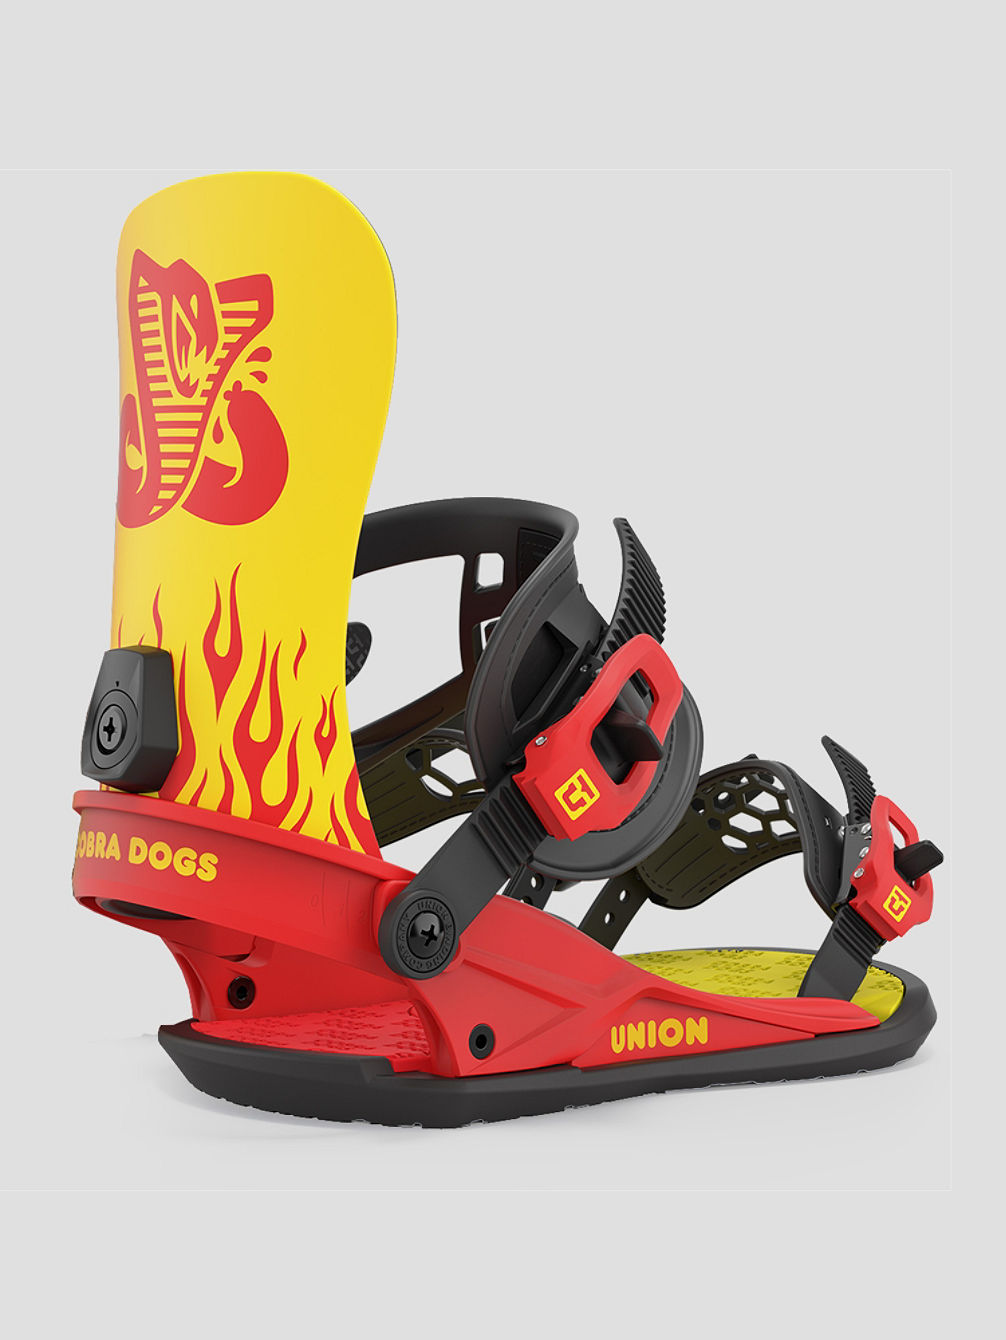 Cobra Dogs X Strata Snowboardbinding